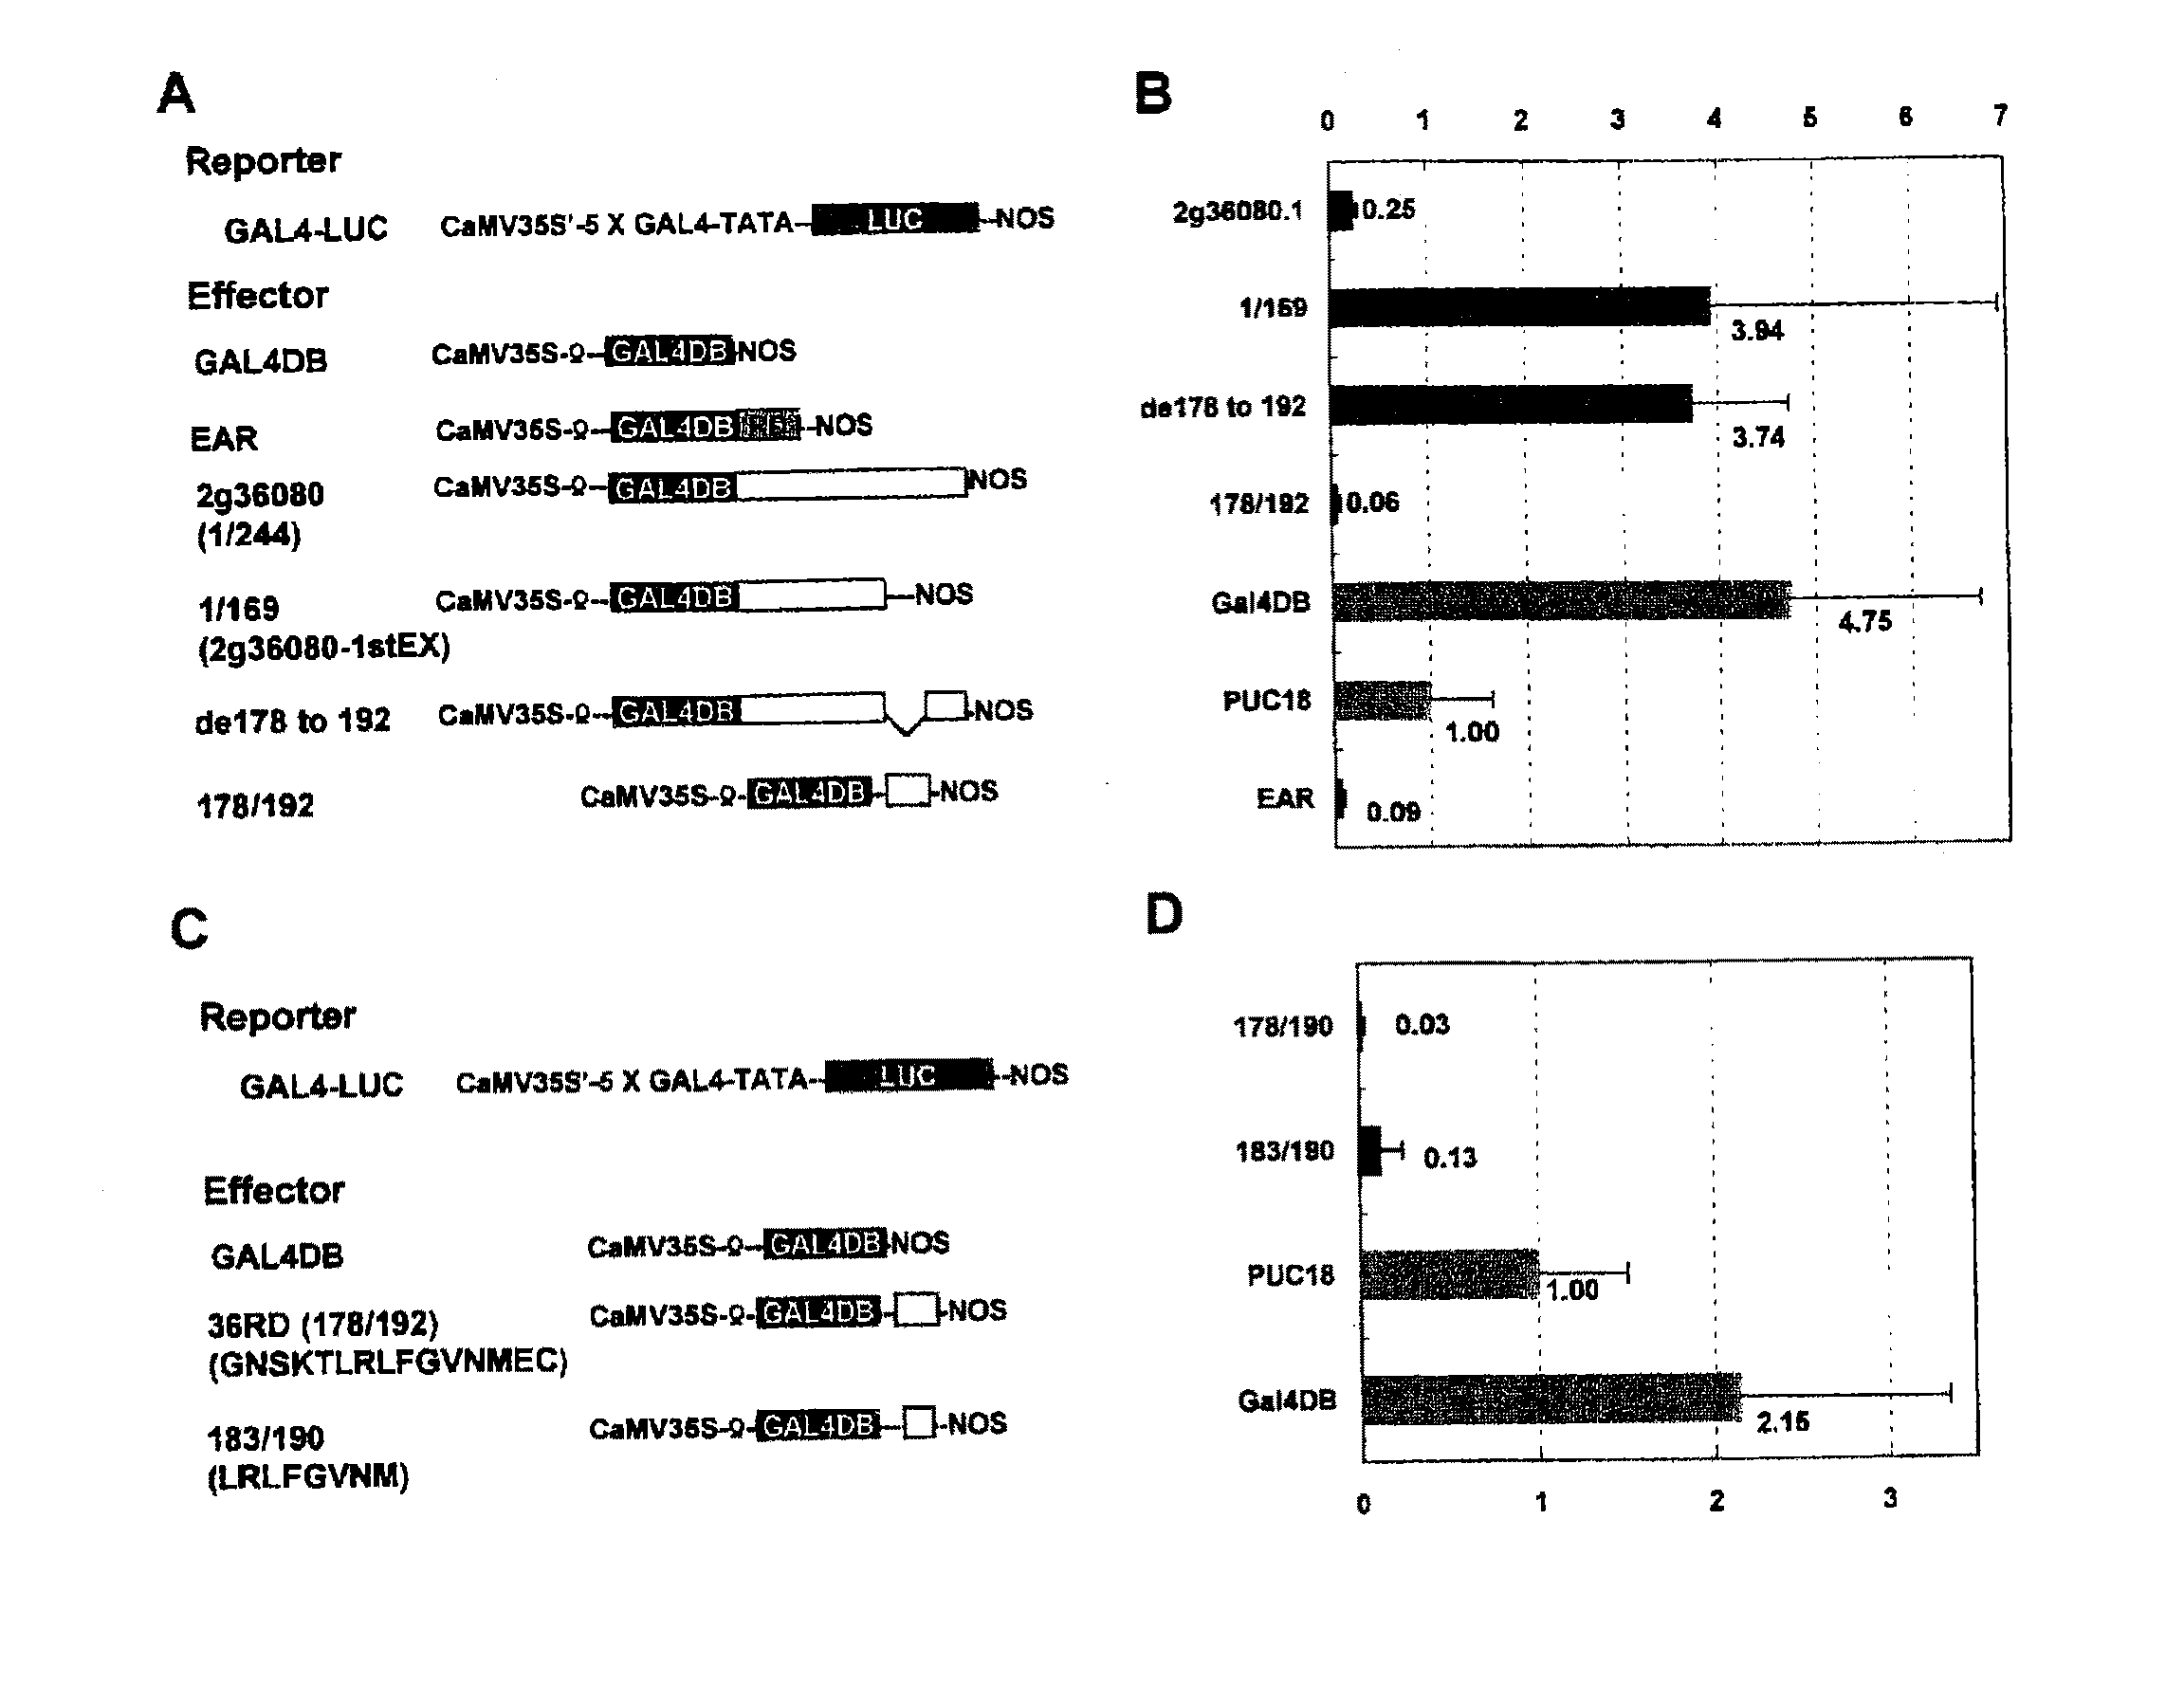 Transcriptional repressor peptides and genes for the same